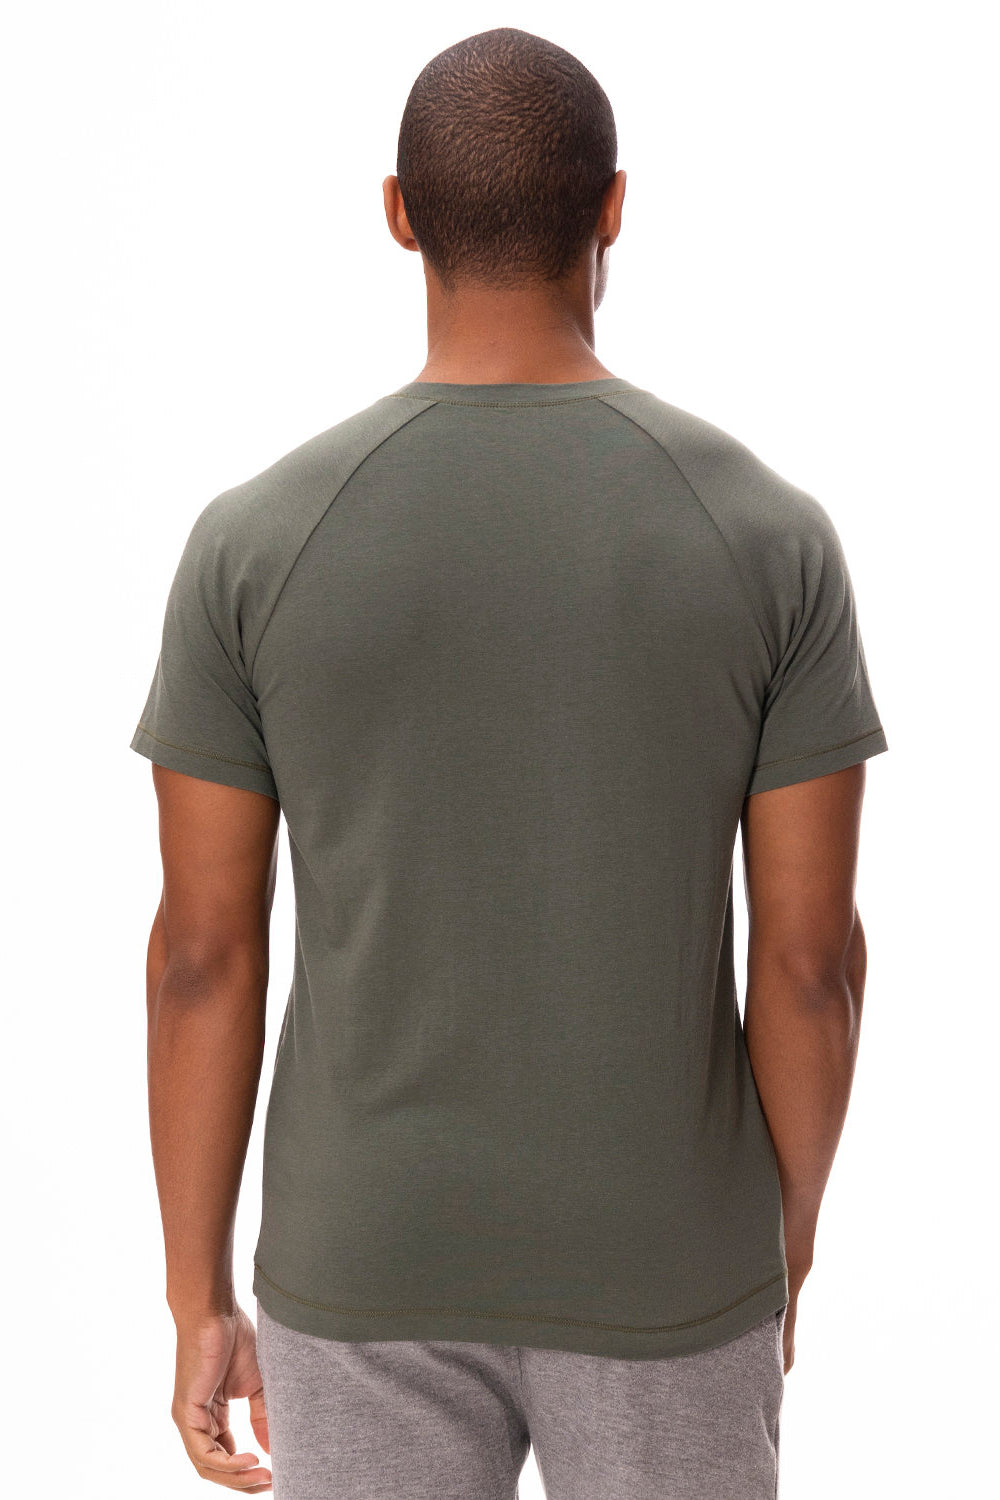 Threadfast Apparel 382R Mens Impact Short Sleeve Crewneck T-Shirt Army Green Back